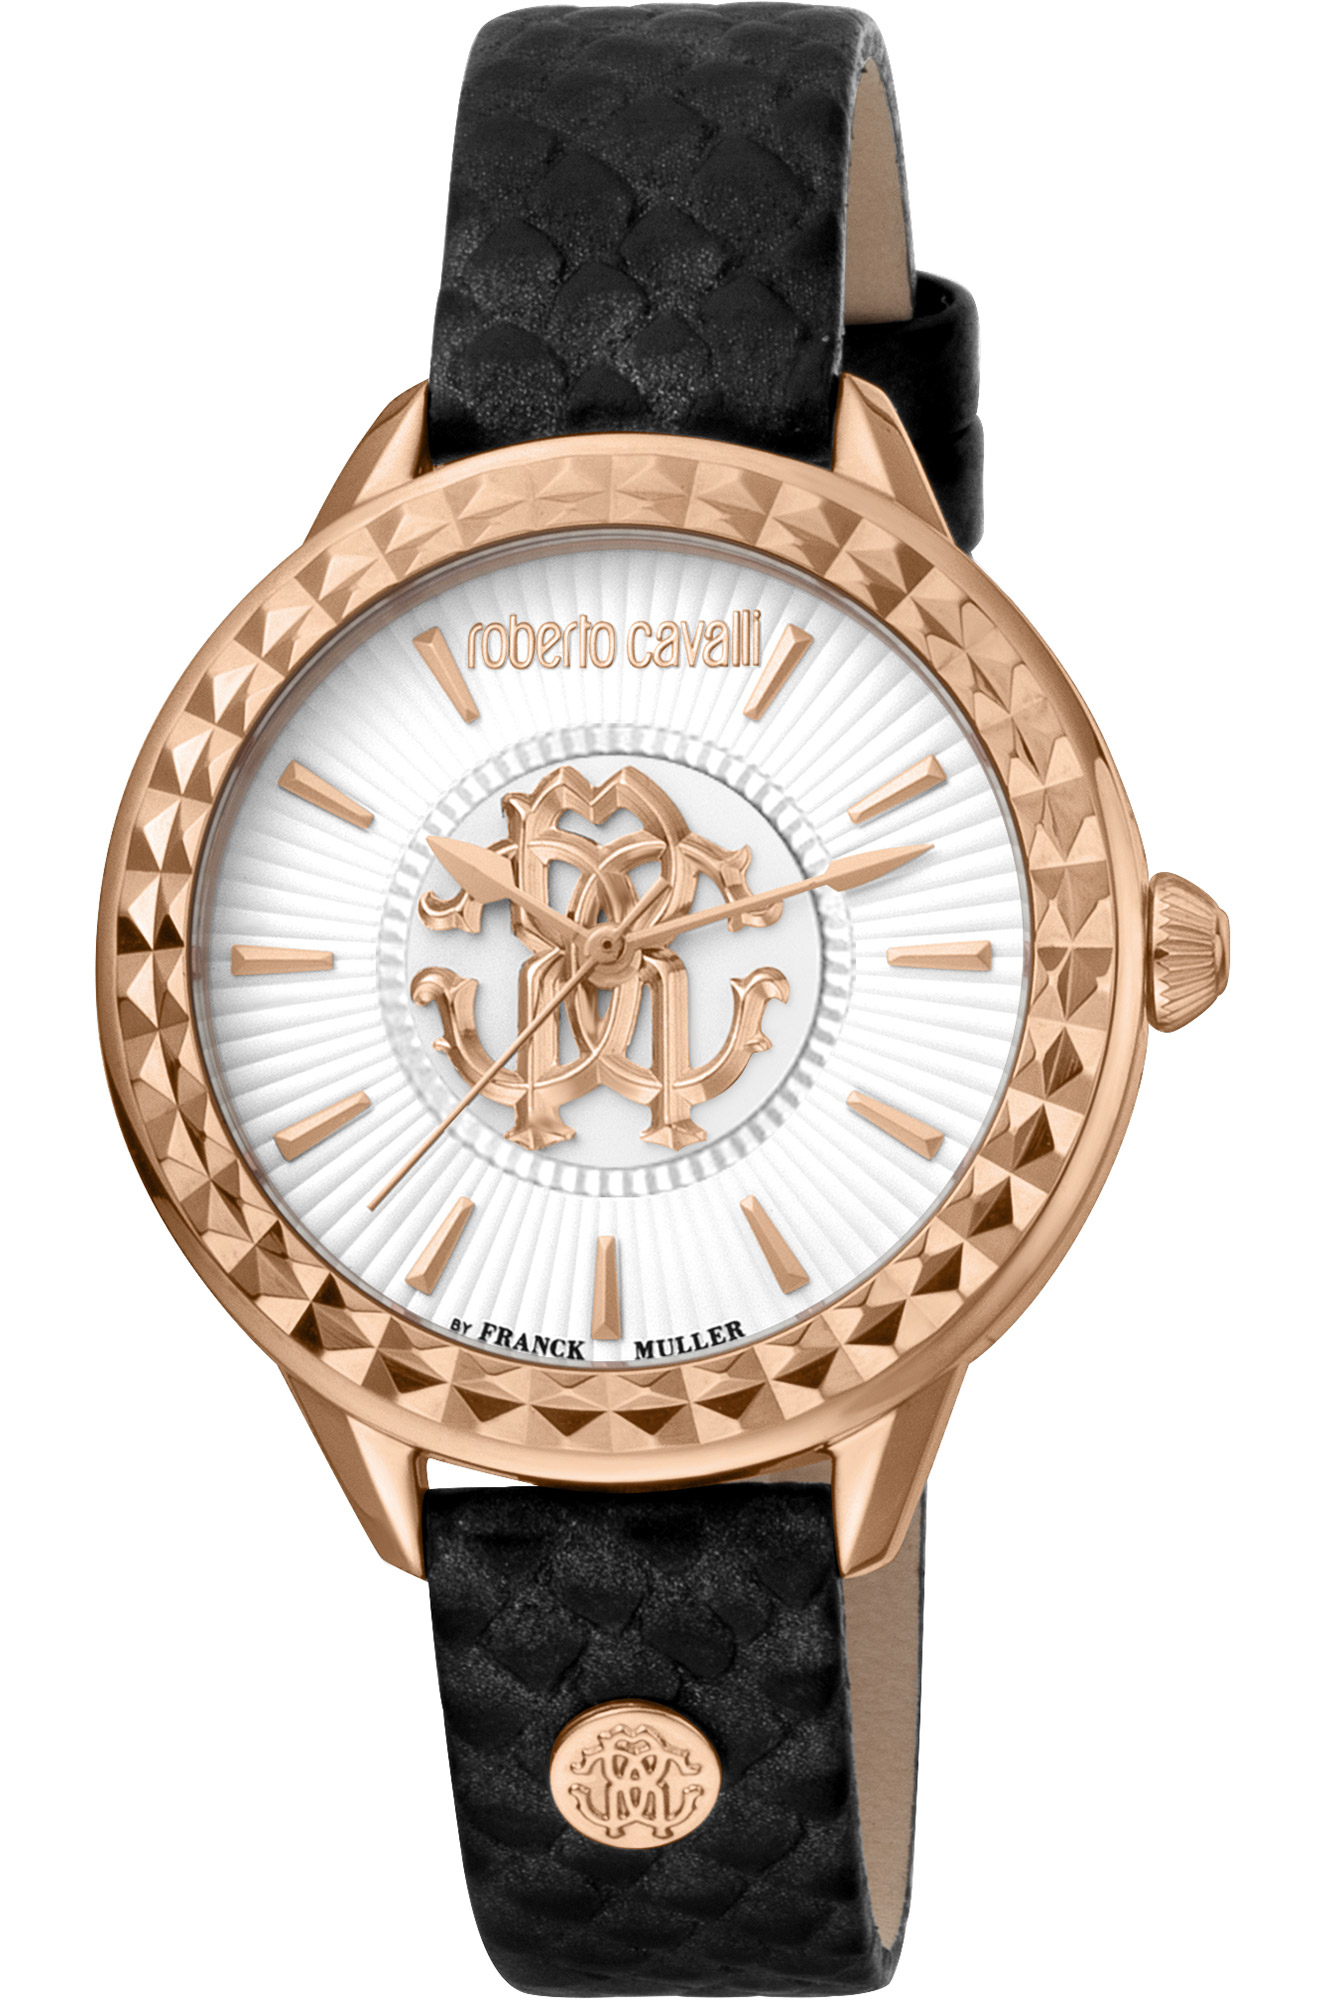 Reloj Roberto Cavalli by Franck Muller rv1l125l0041